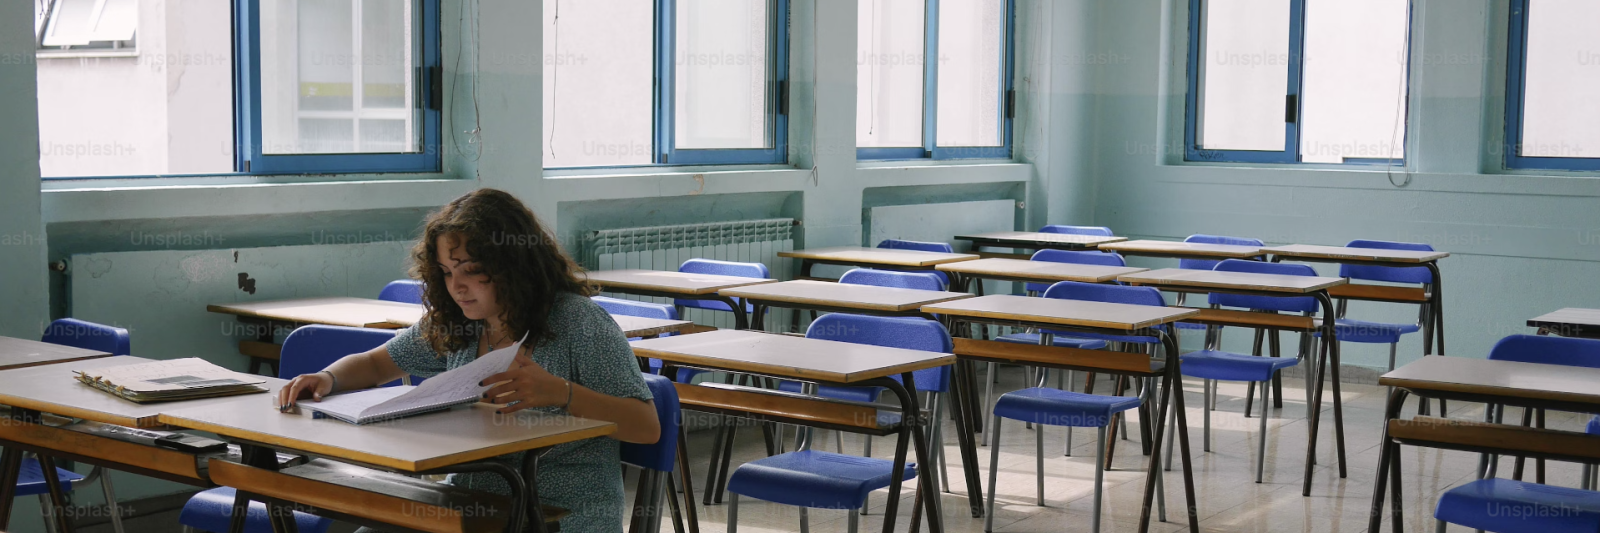 Una ragazza sola in un'aula